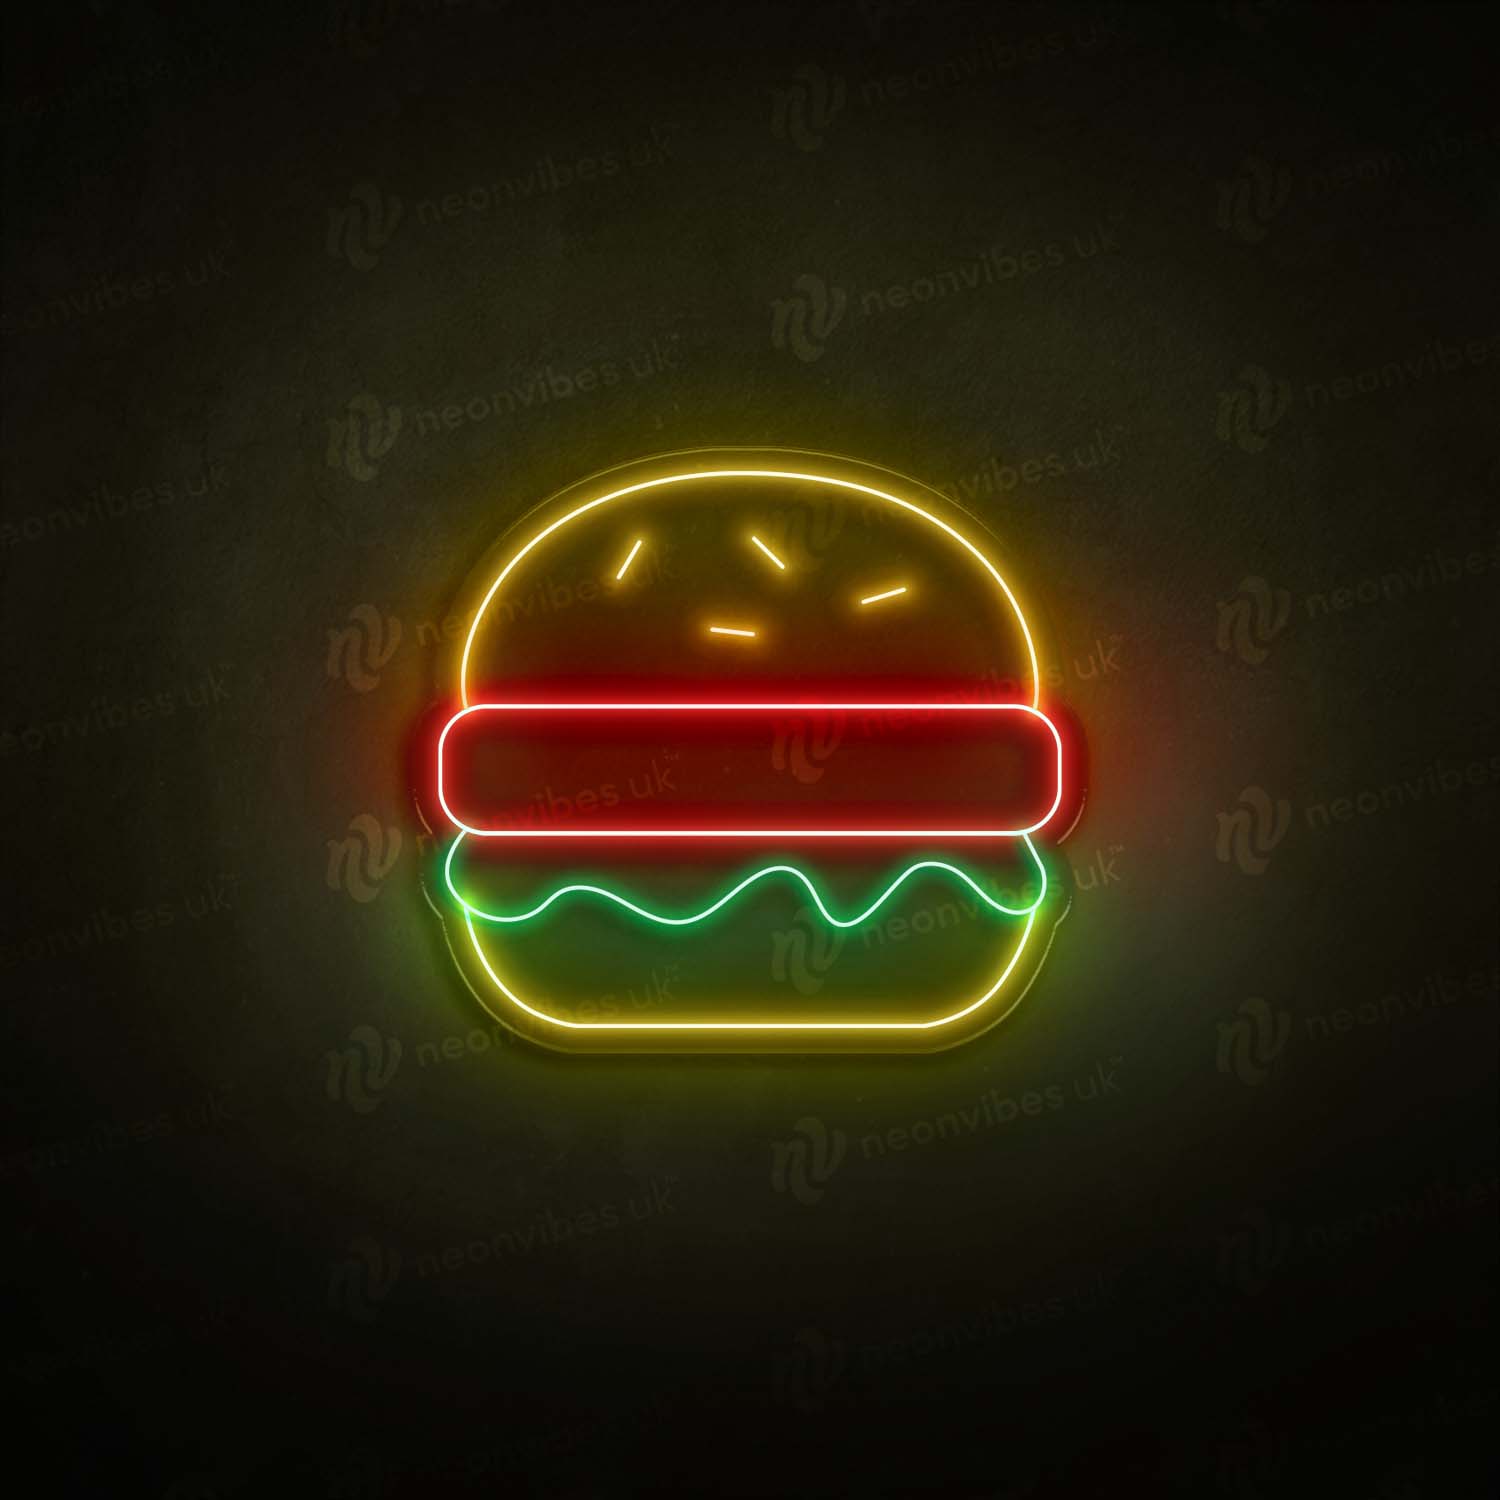 Burger neon sign